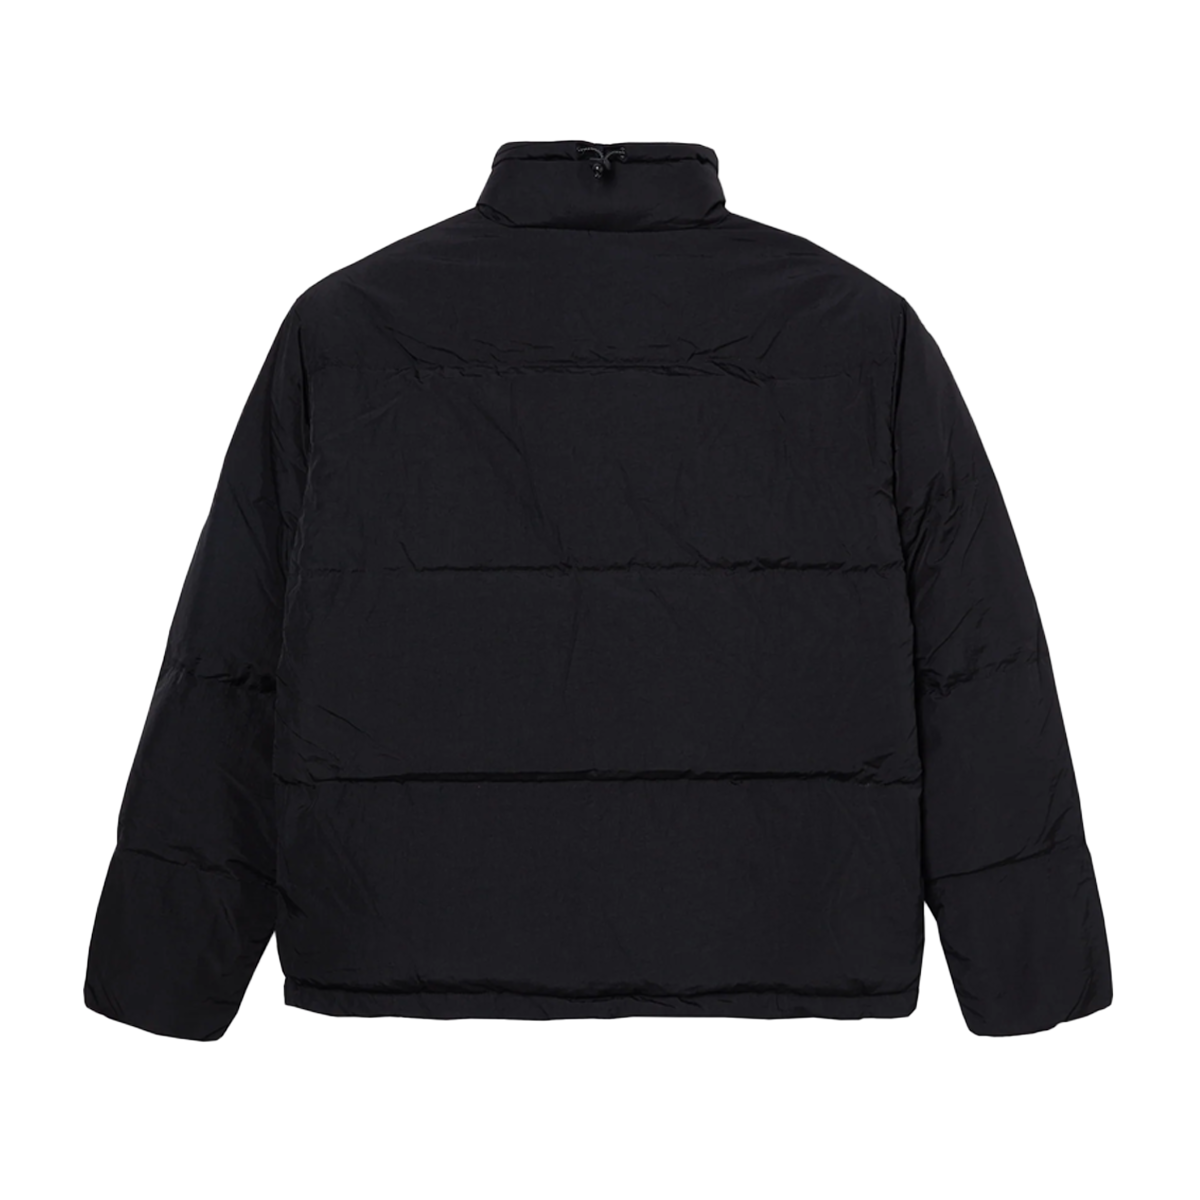 Polar Pocket Puffer Jacket - Black